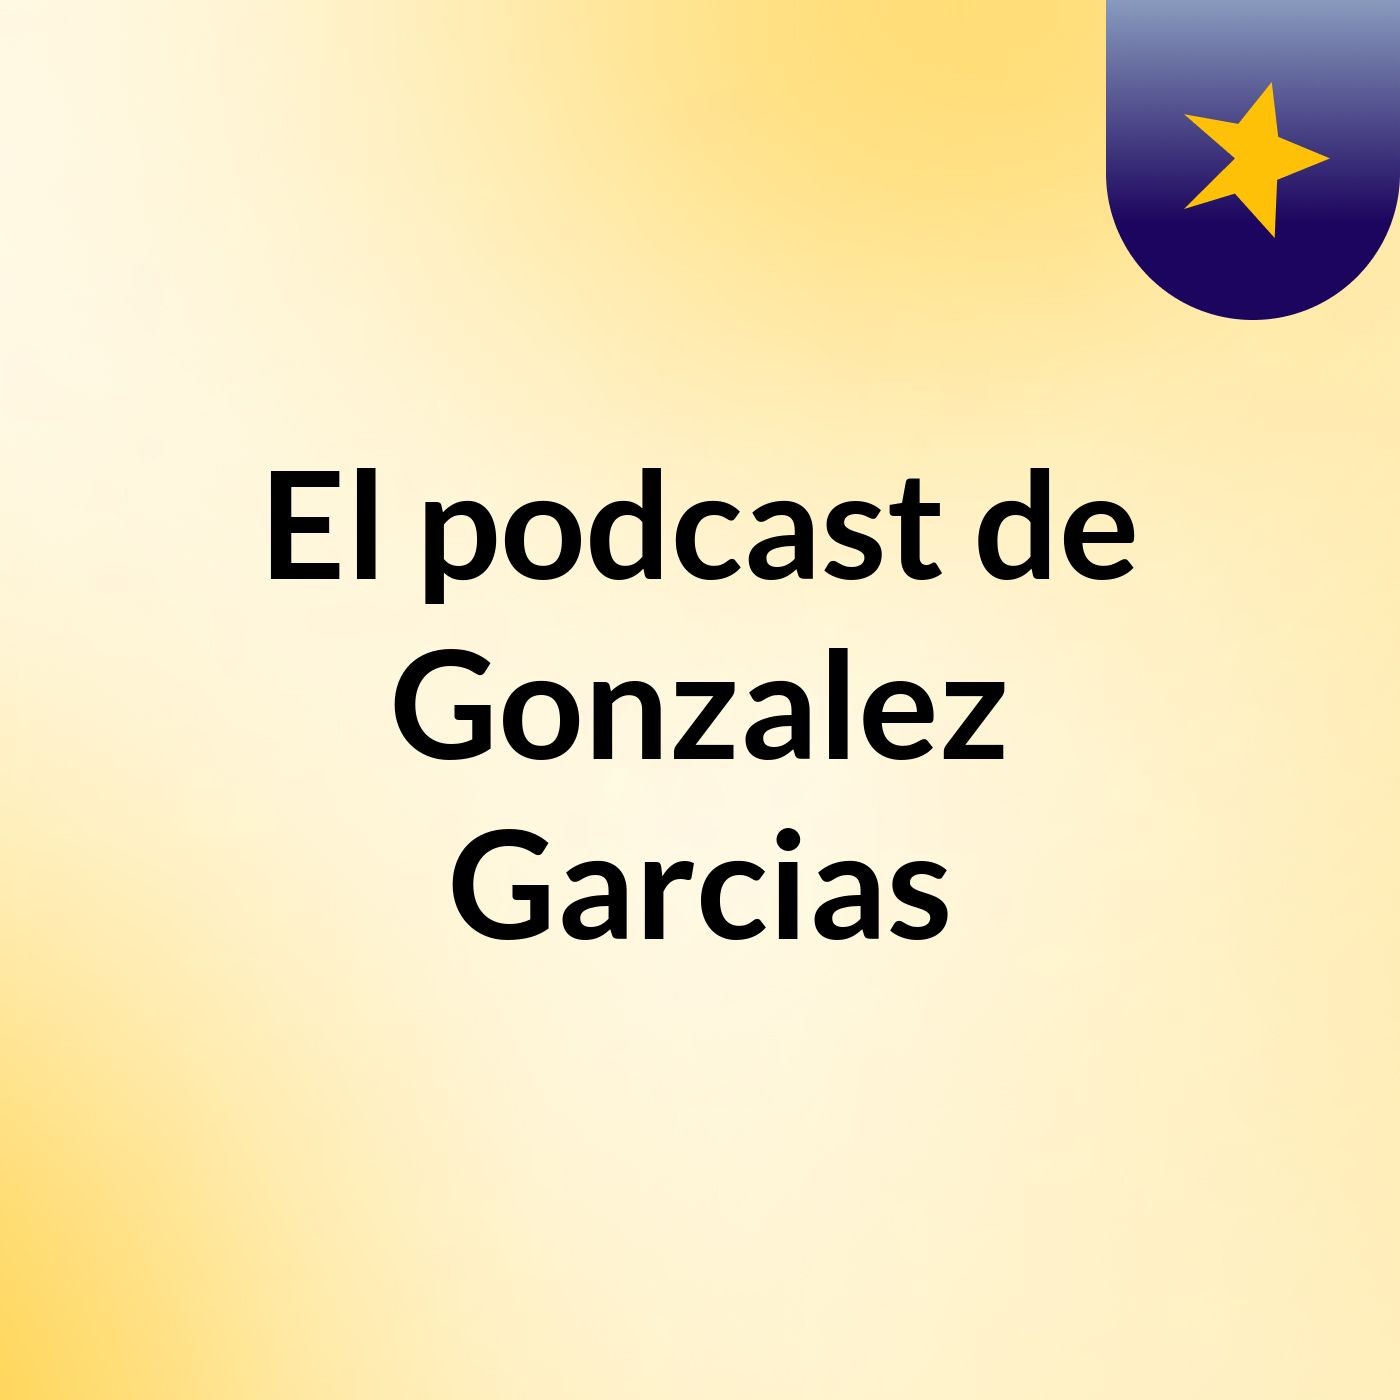 El podcast de Gonzalez Garcias